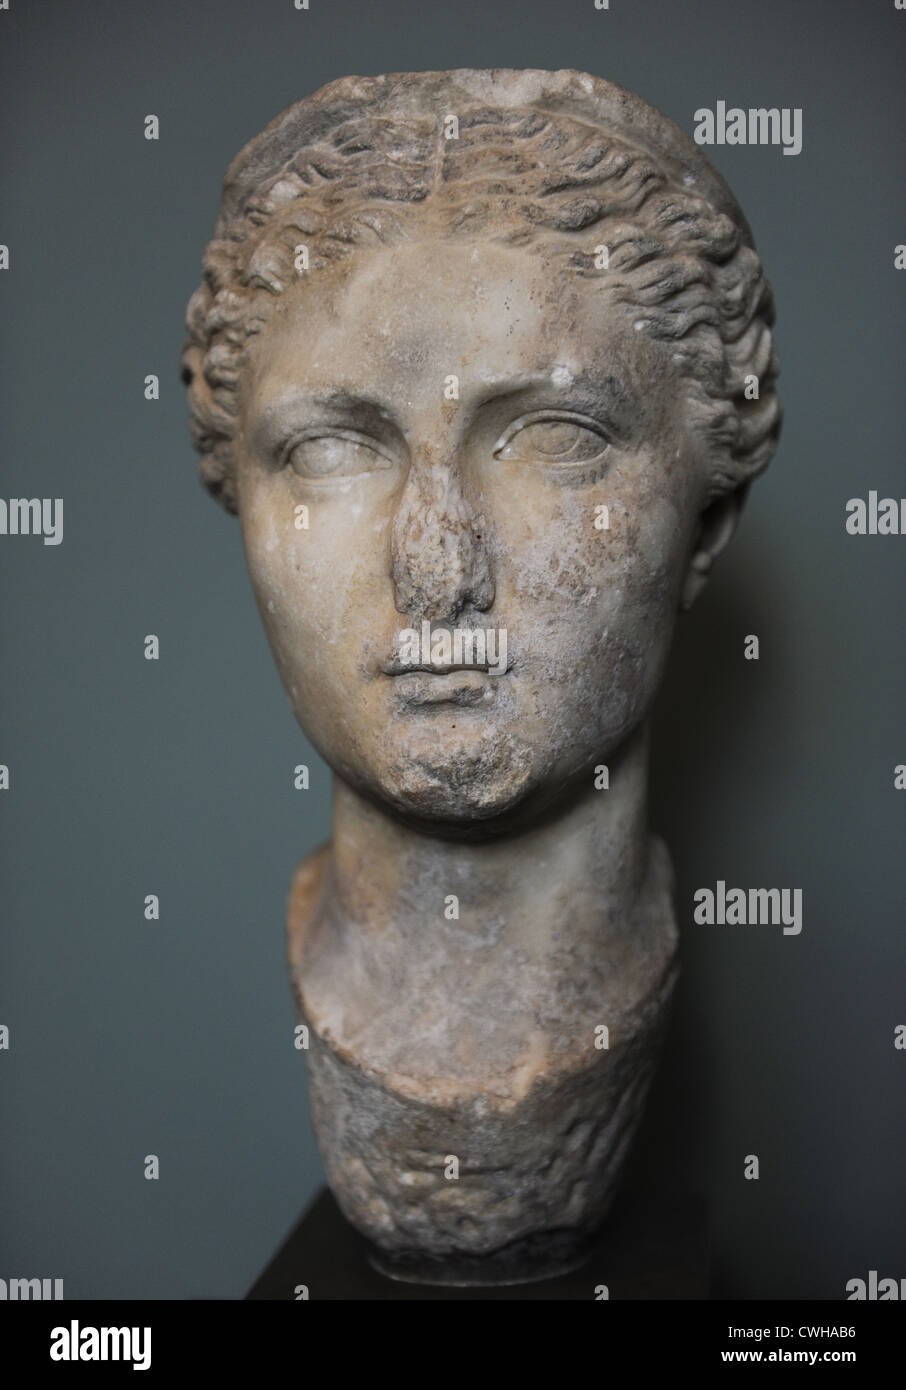 Vibia Sabina (83-136/137). Emperatriz romana, esposa de Adriano. Busto. Mármol. C. 117-138 D.C. de Ostia. Carlsberg Glyptotek Museum. Foto de stock